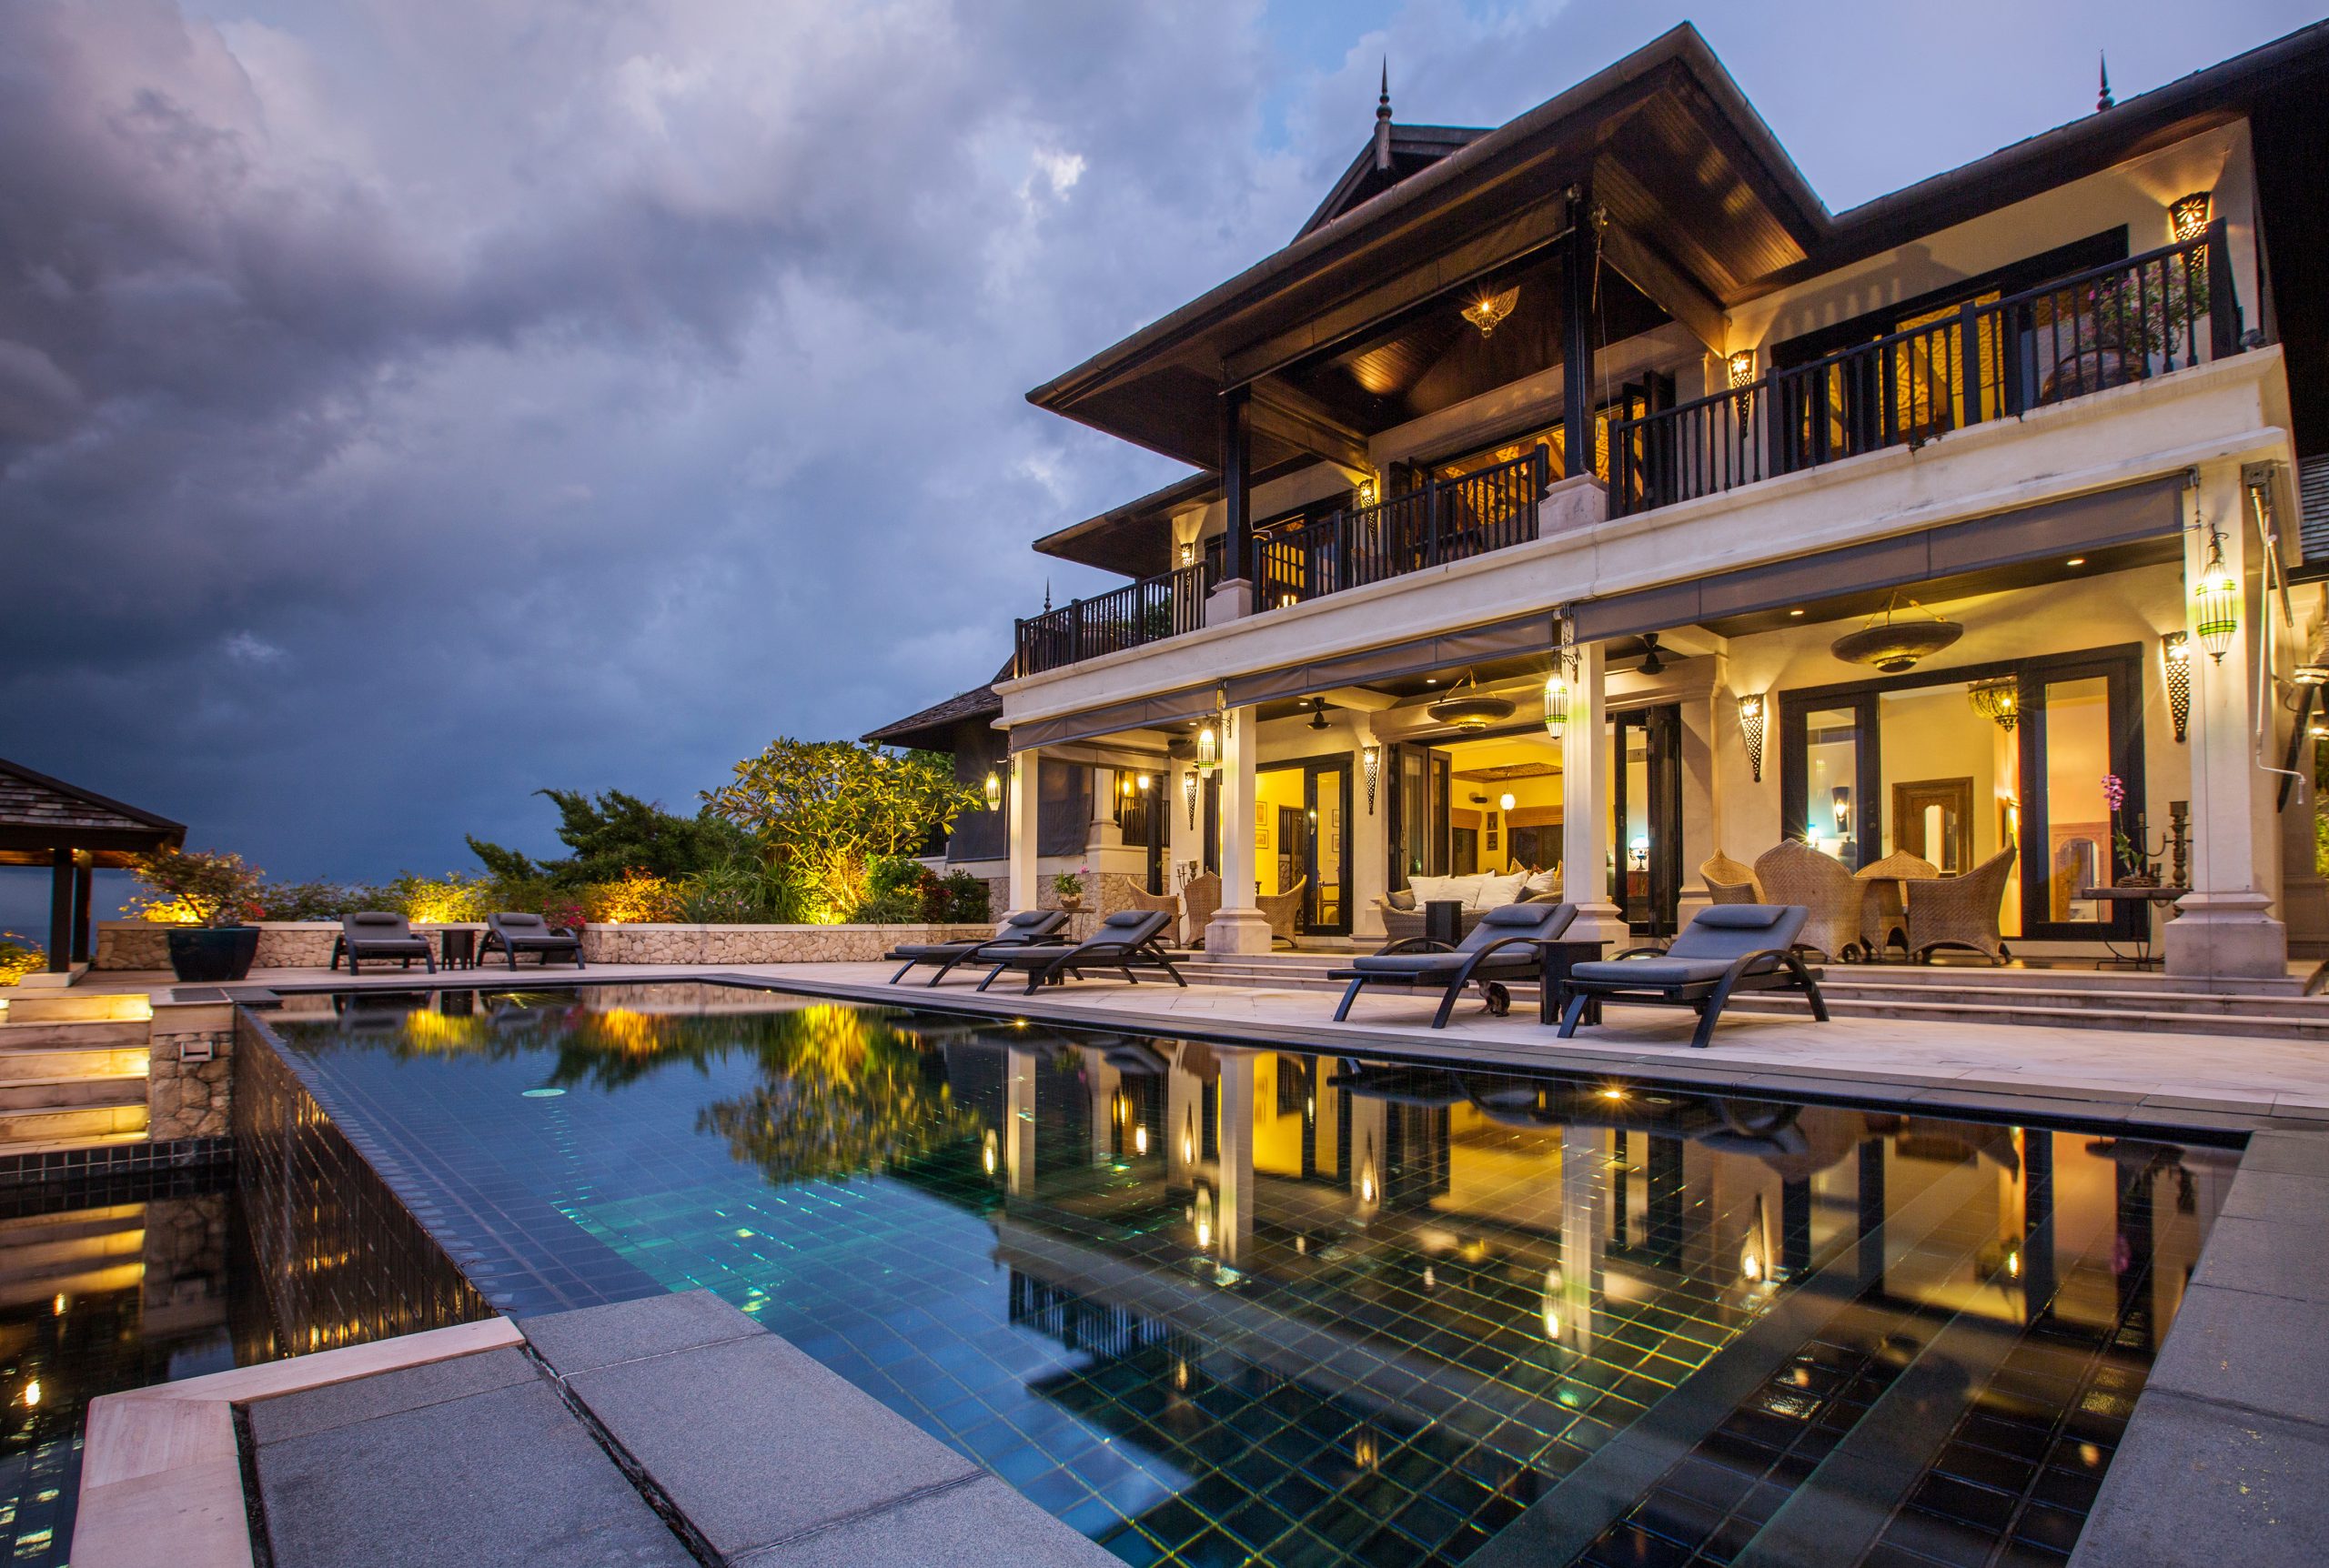 Luxury,Villa,With,Big,Swimming,Pool,Interior,Outdoor